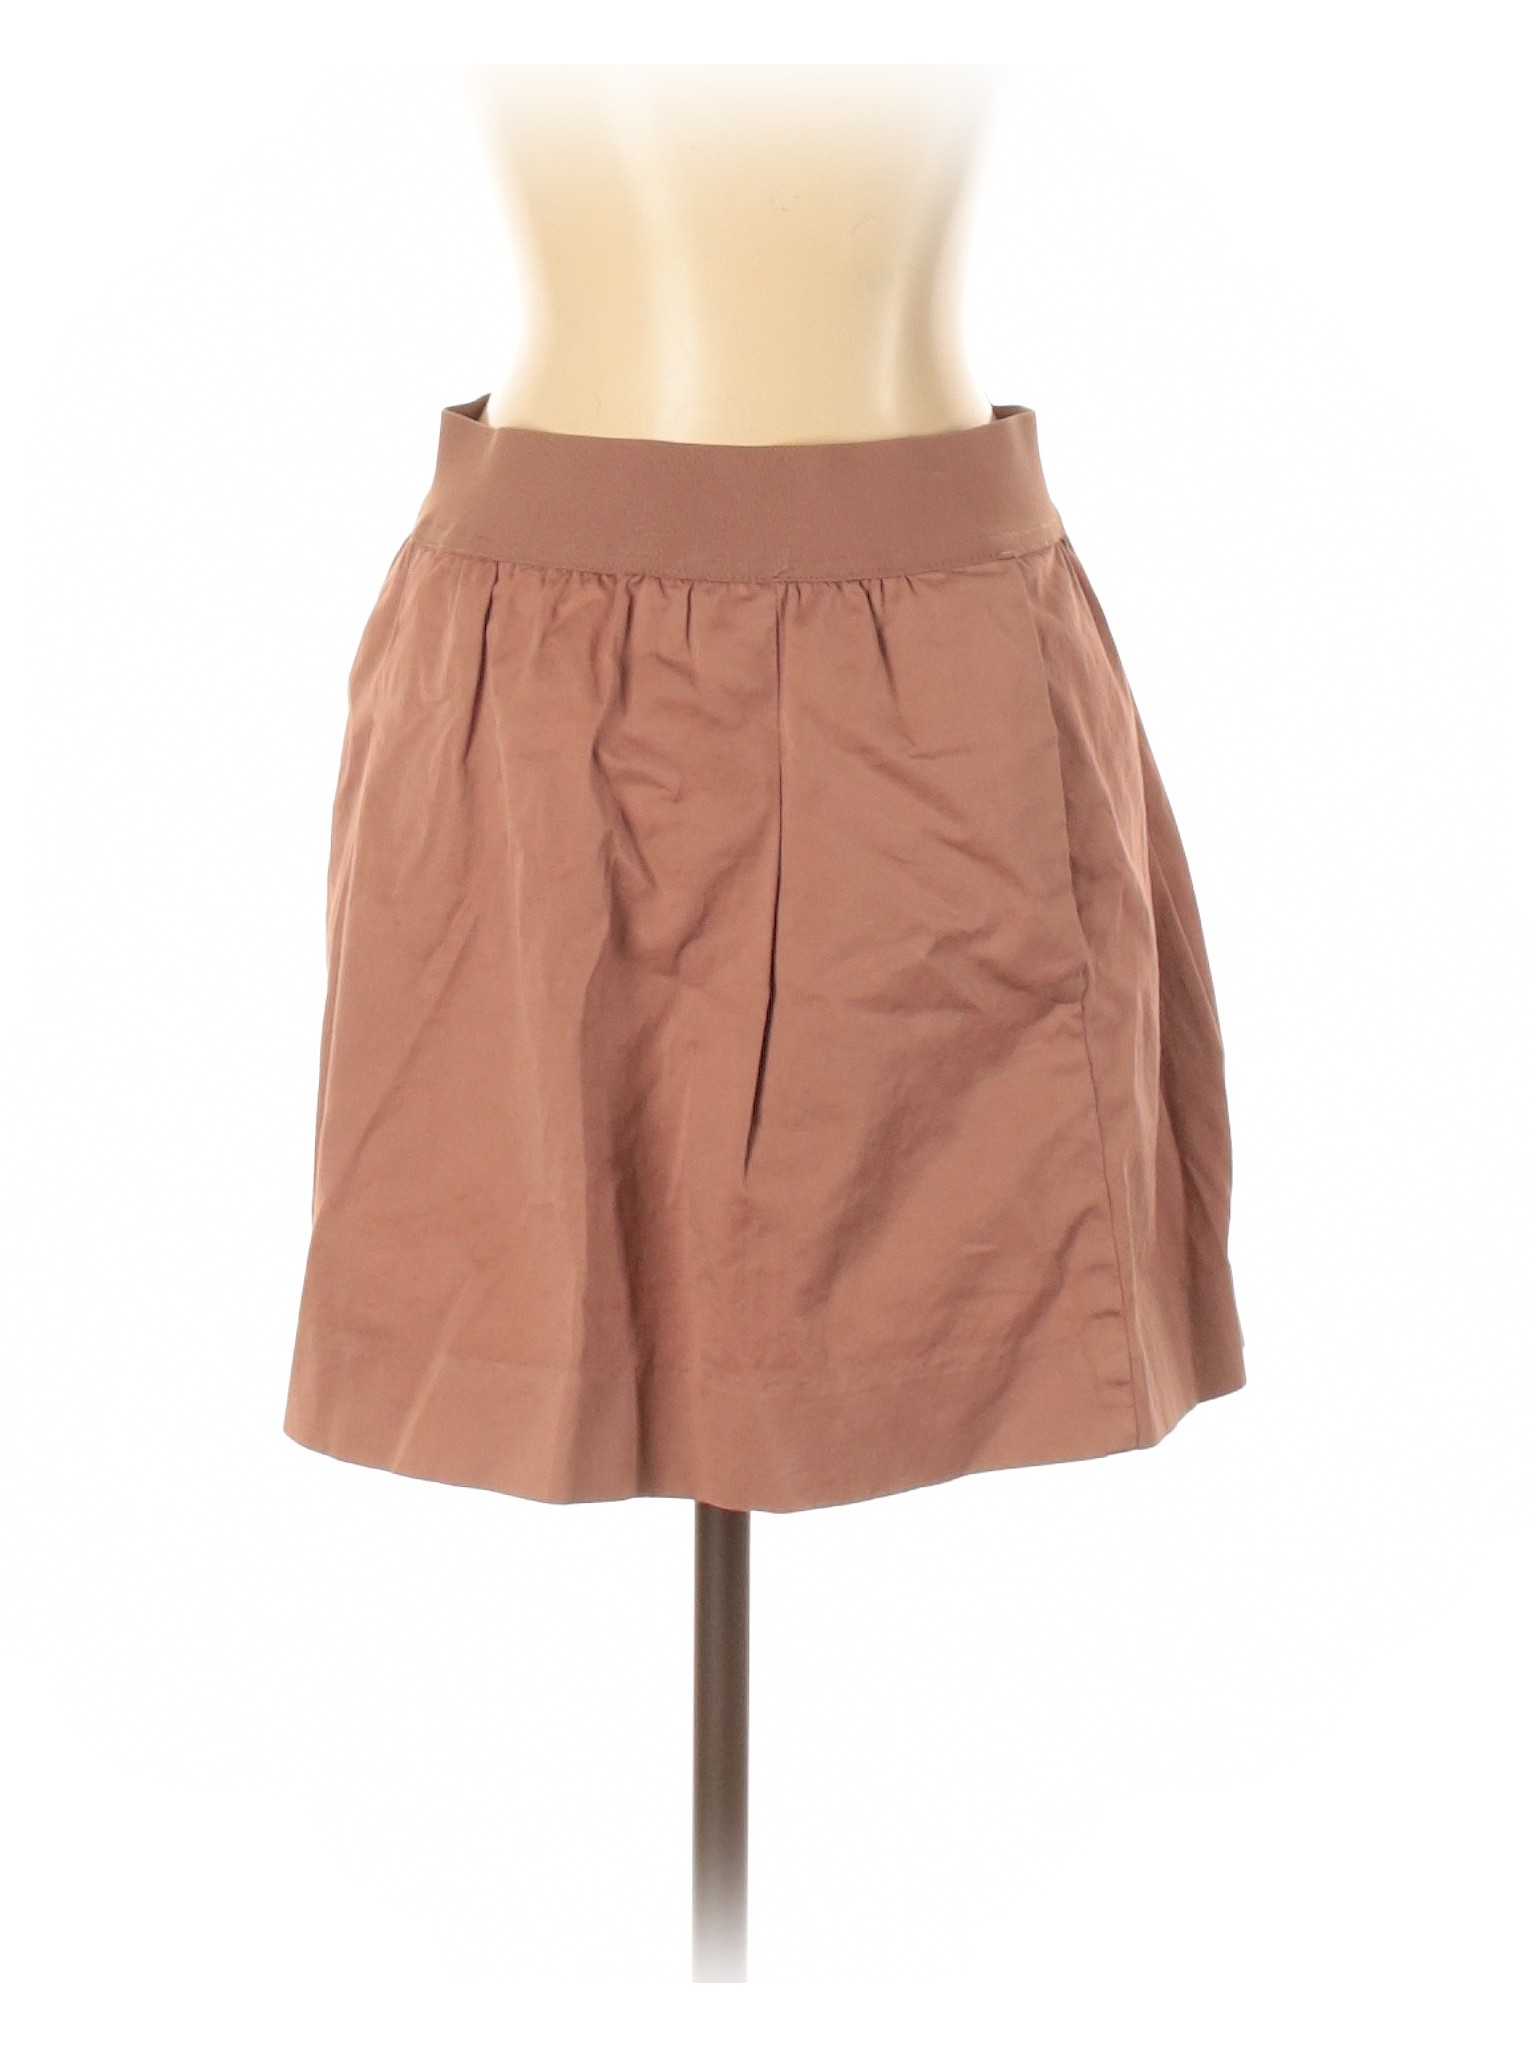 J.Crew Women Brown Casual Skirt 0 | eBay